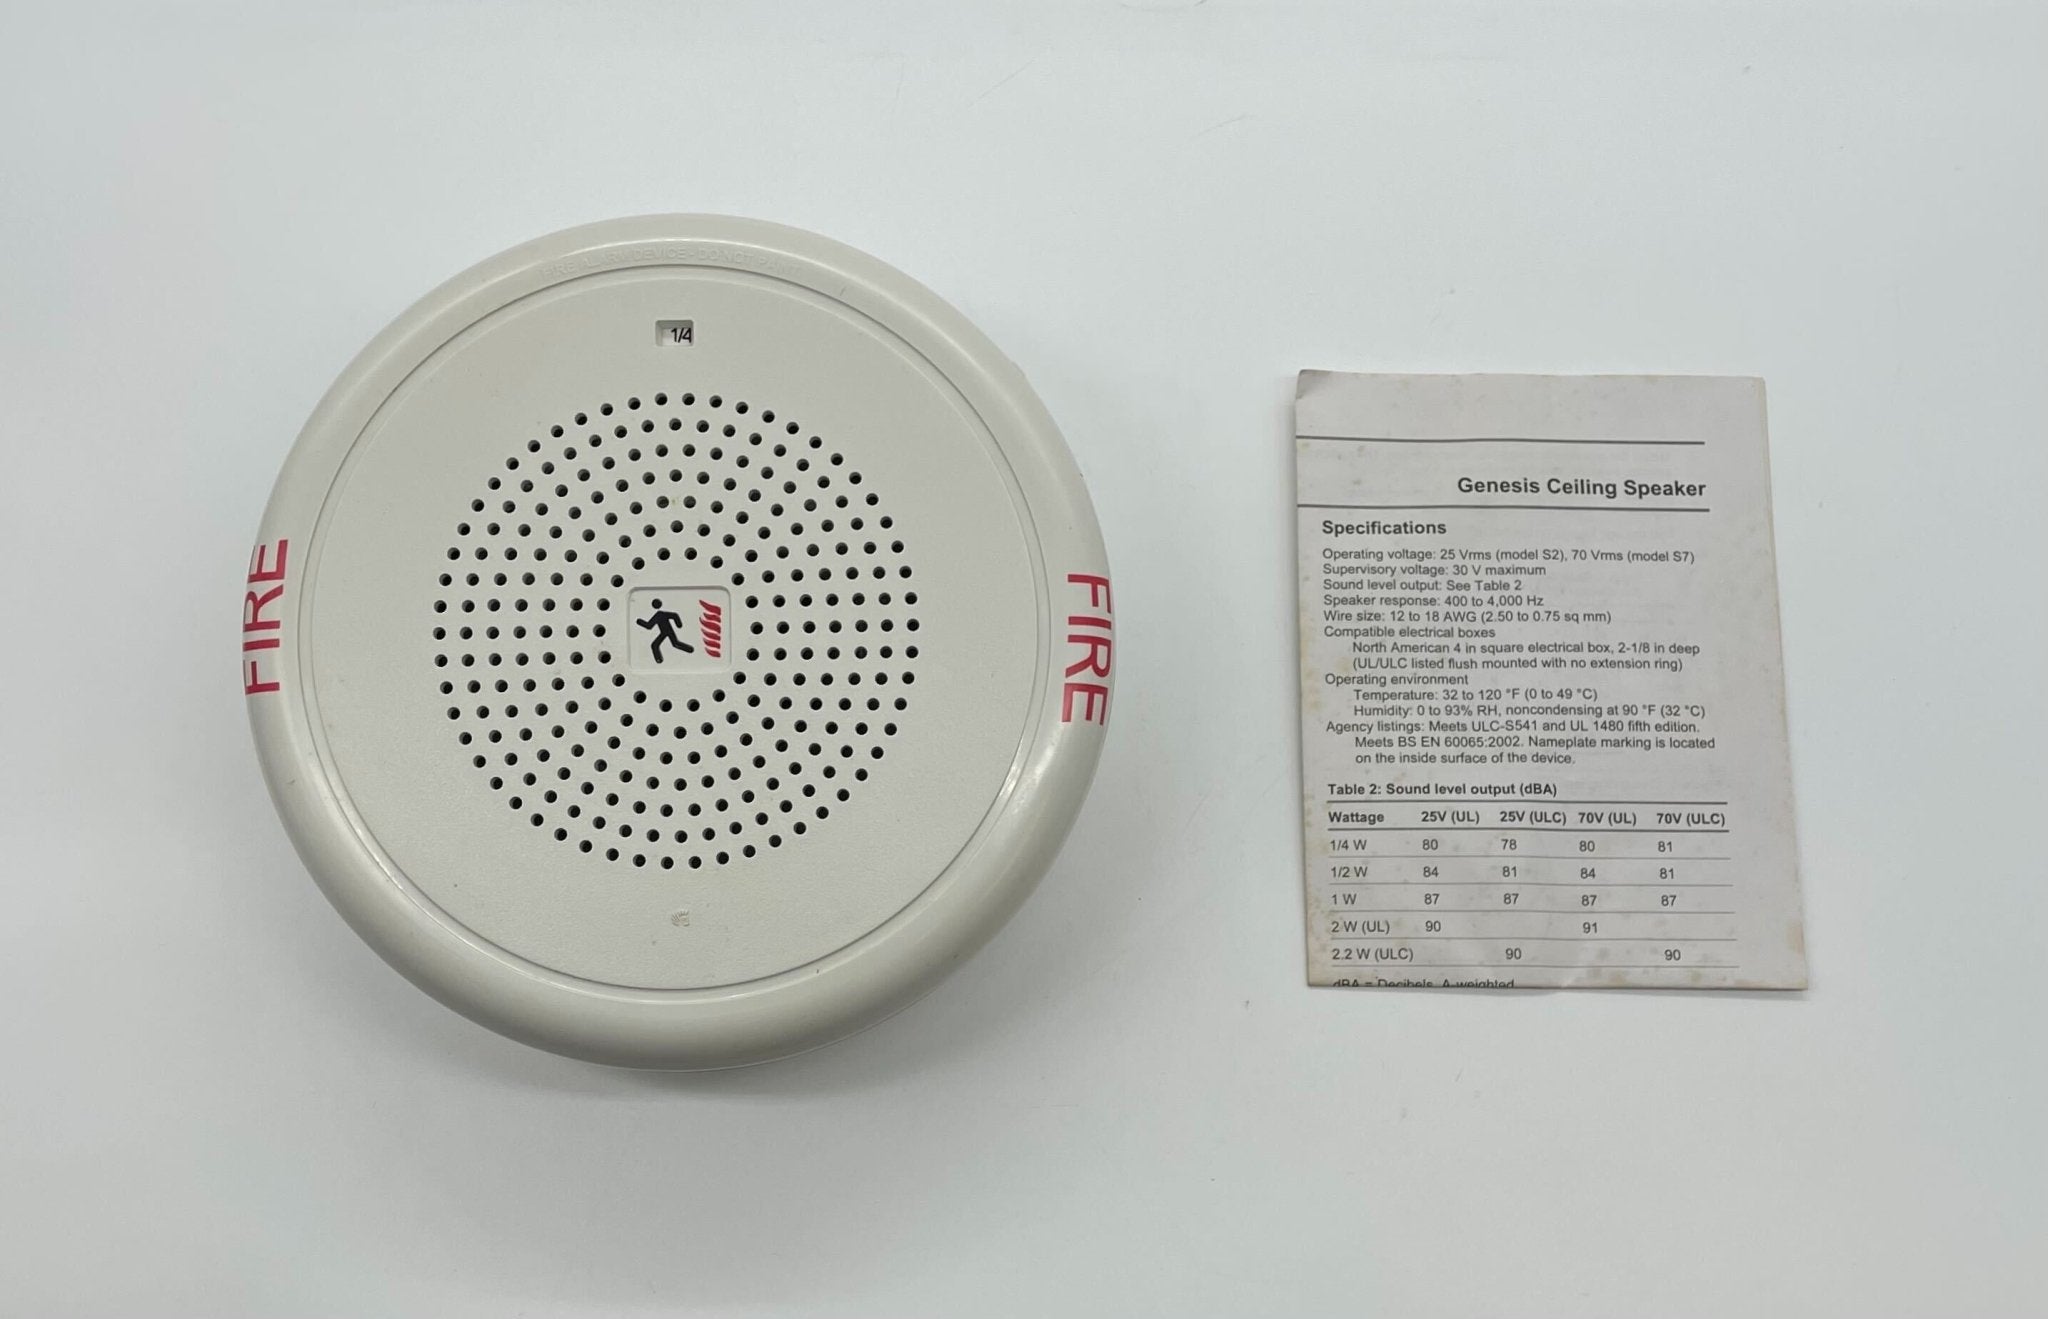 Edwards GCF-S2 - The Fire Alarm Supplier